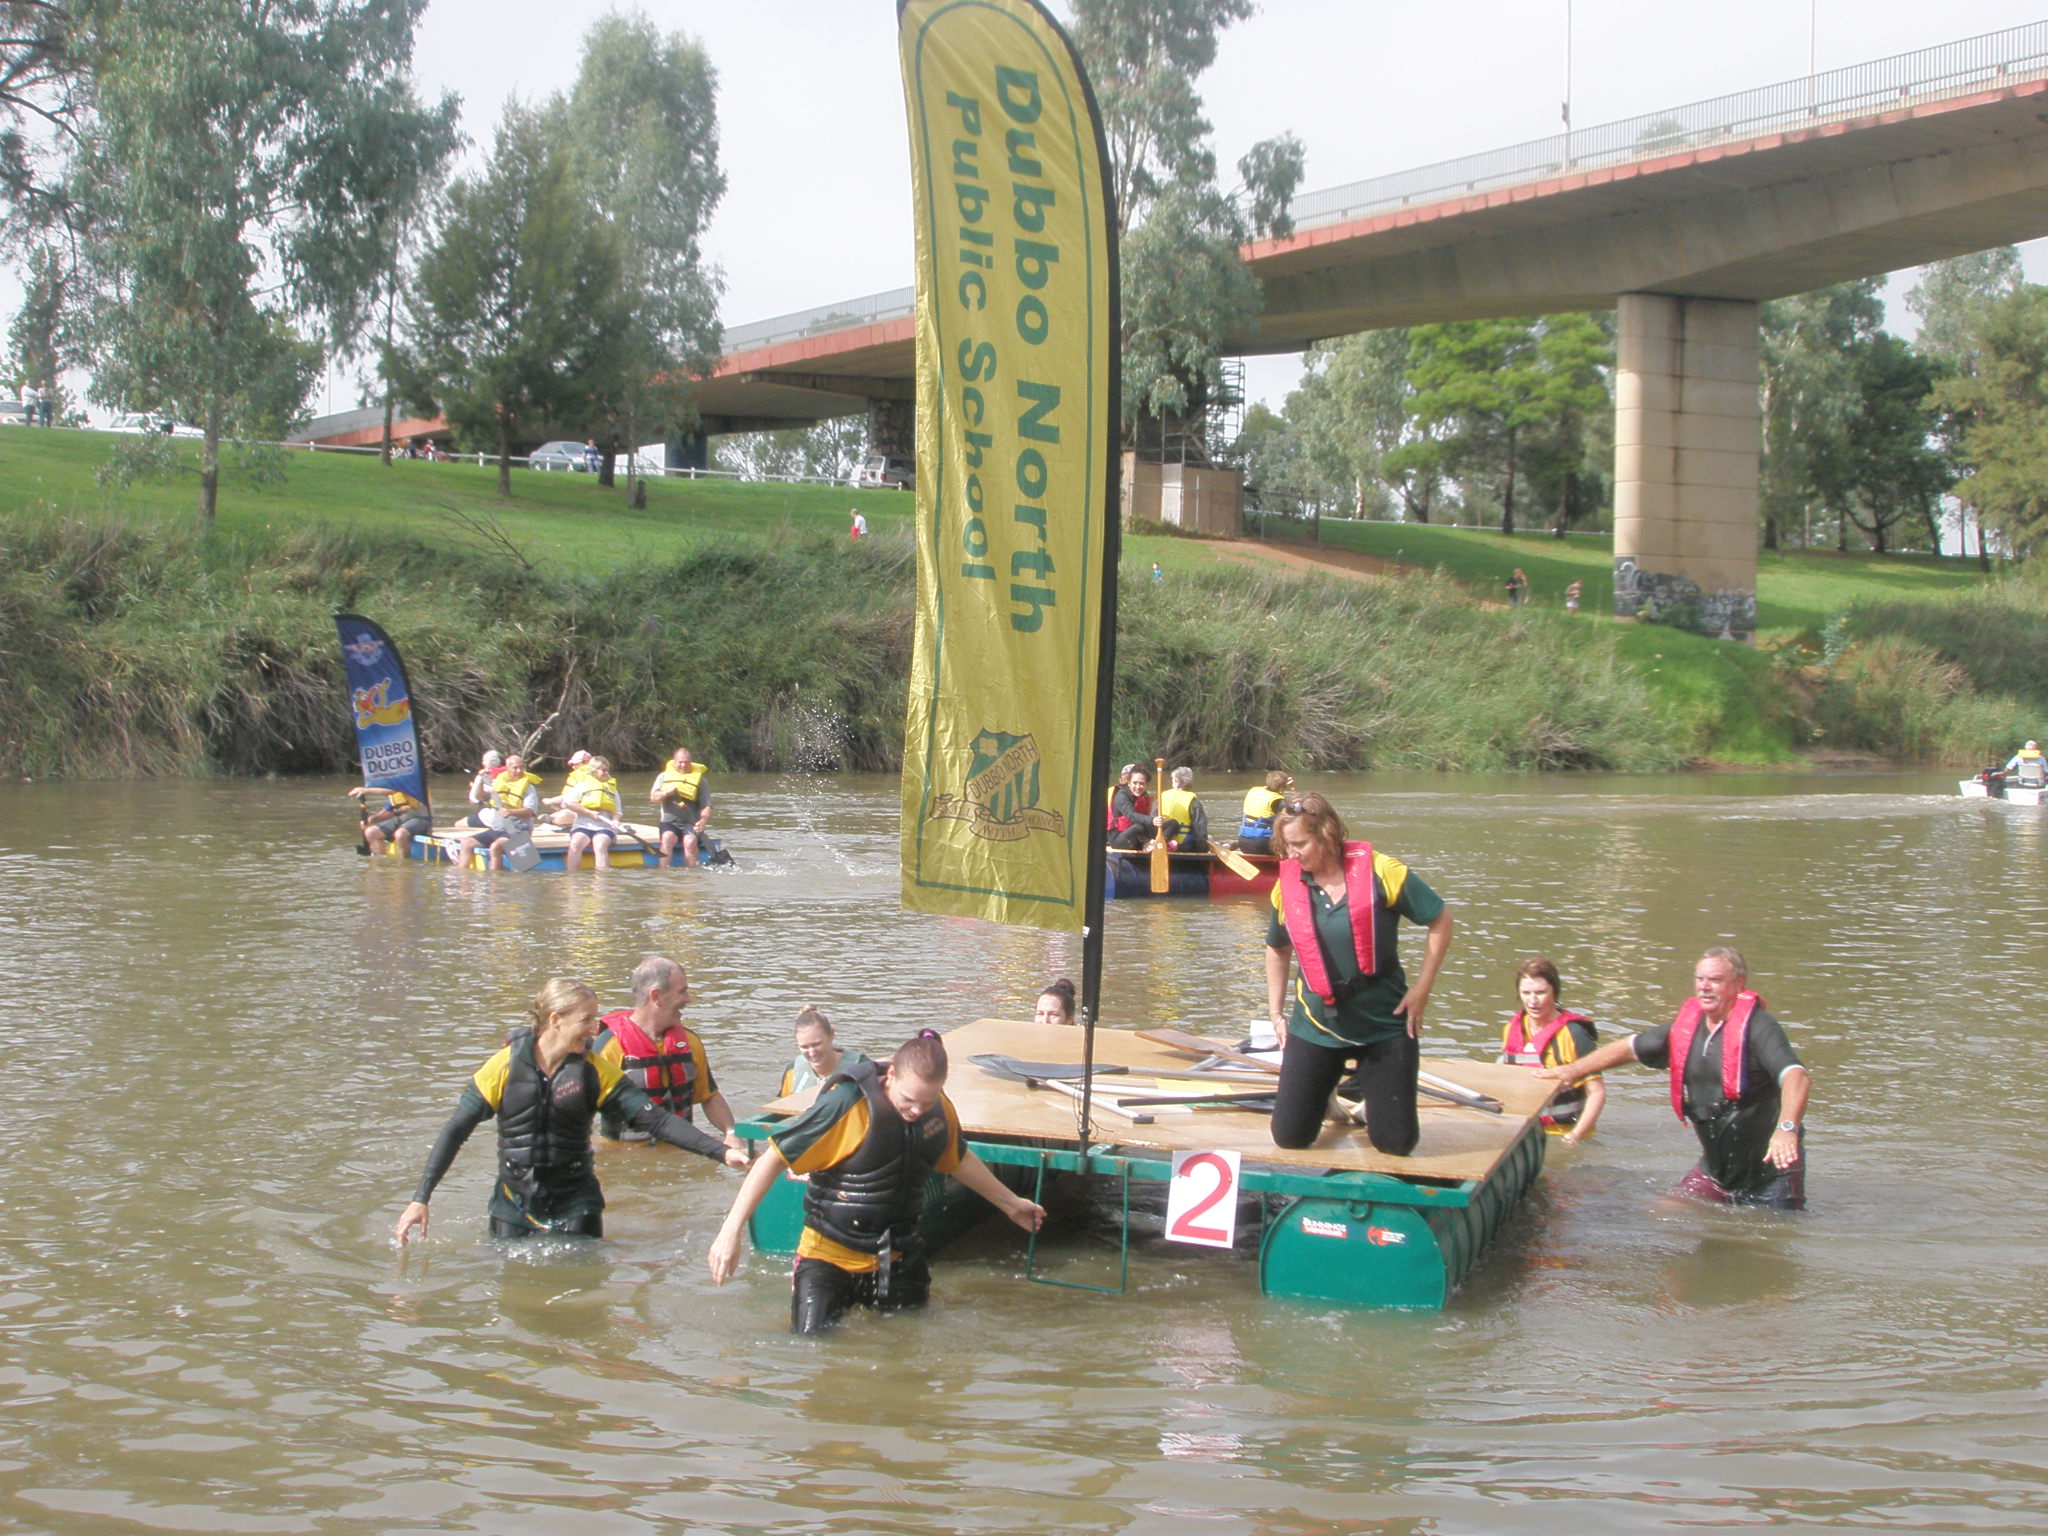 Staff on their raft